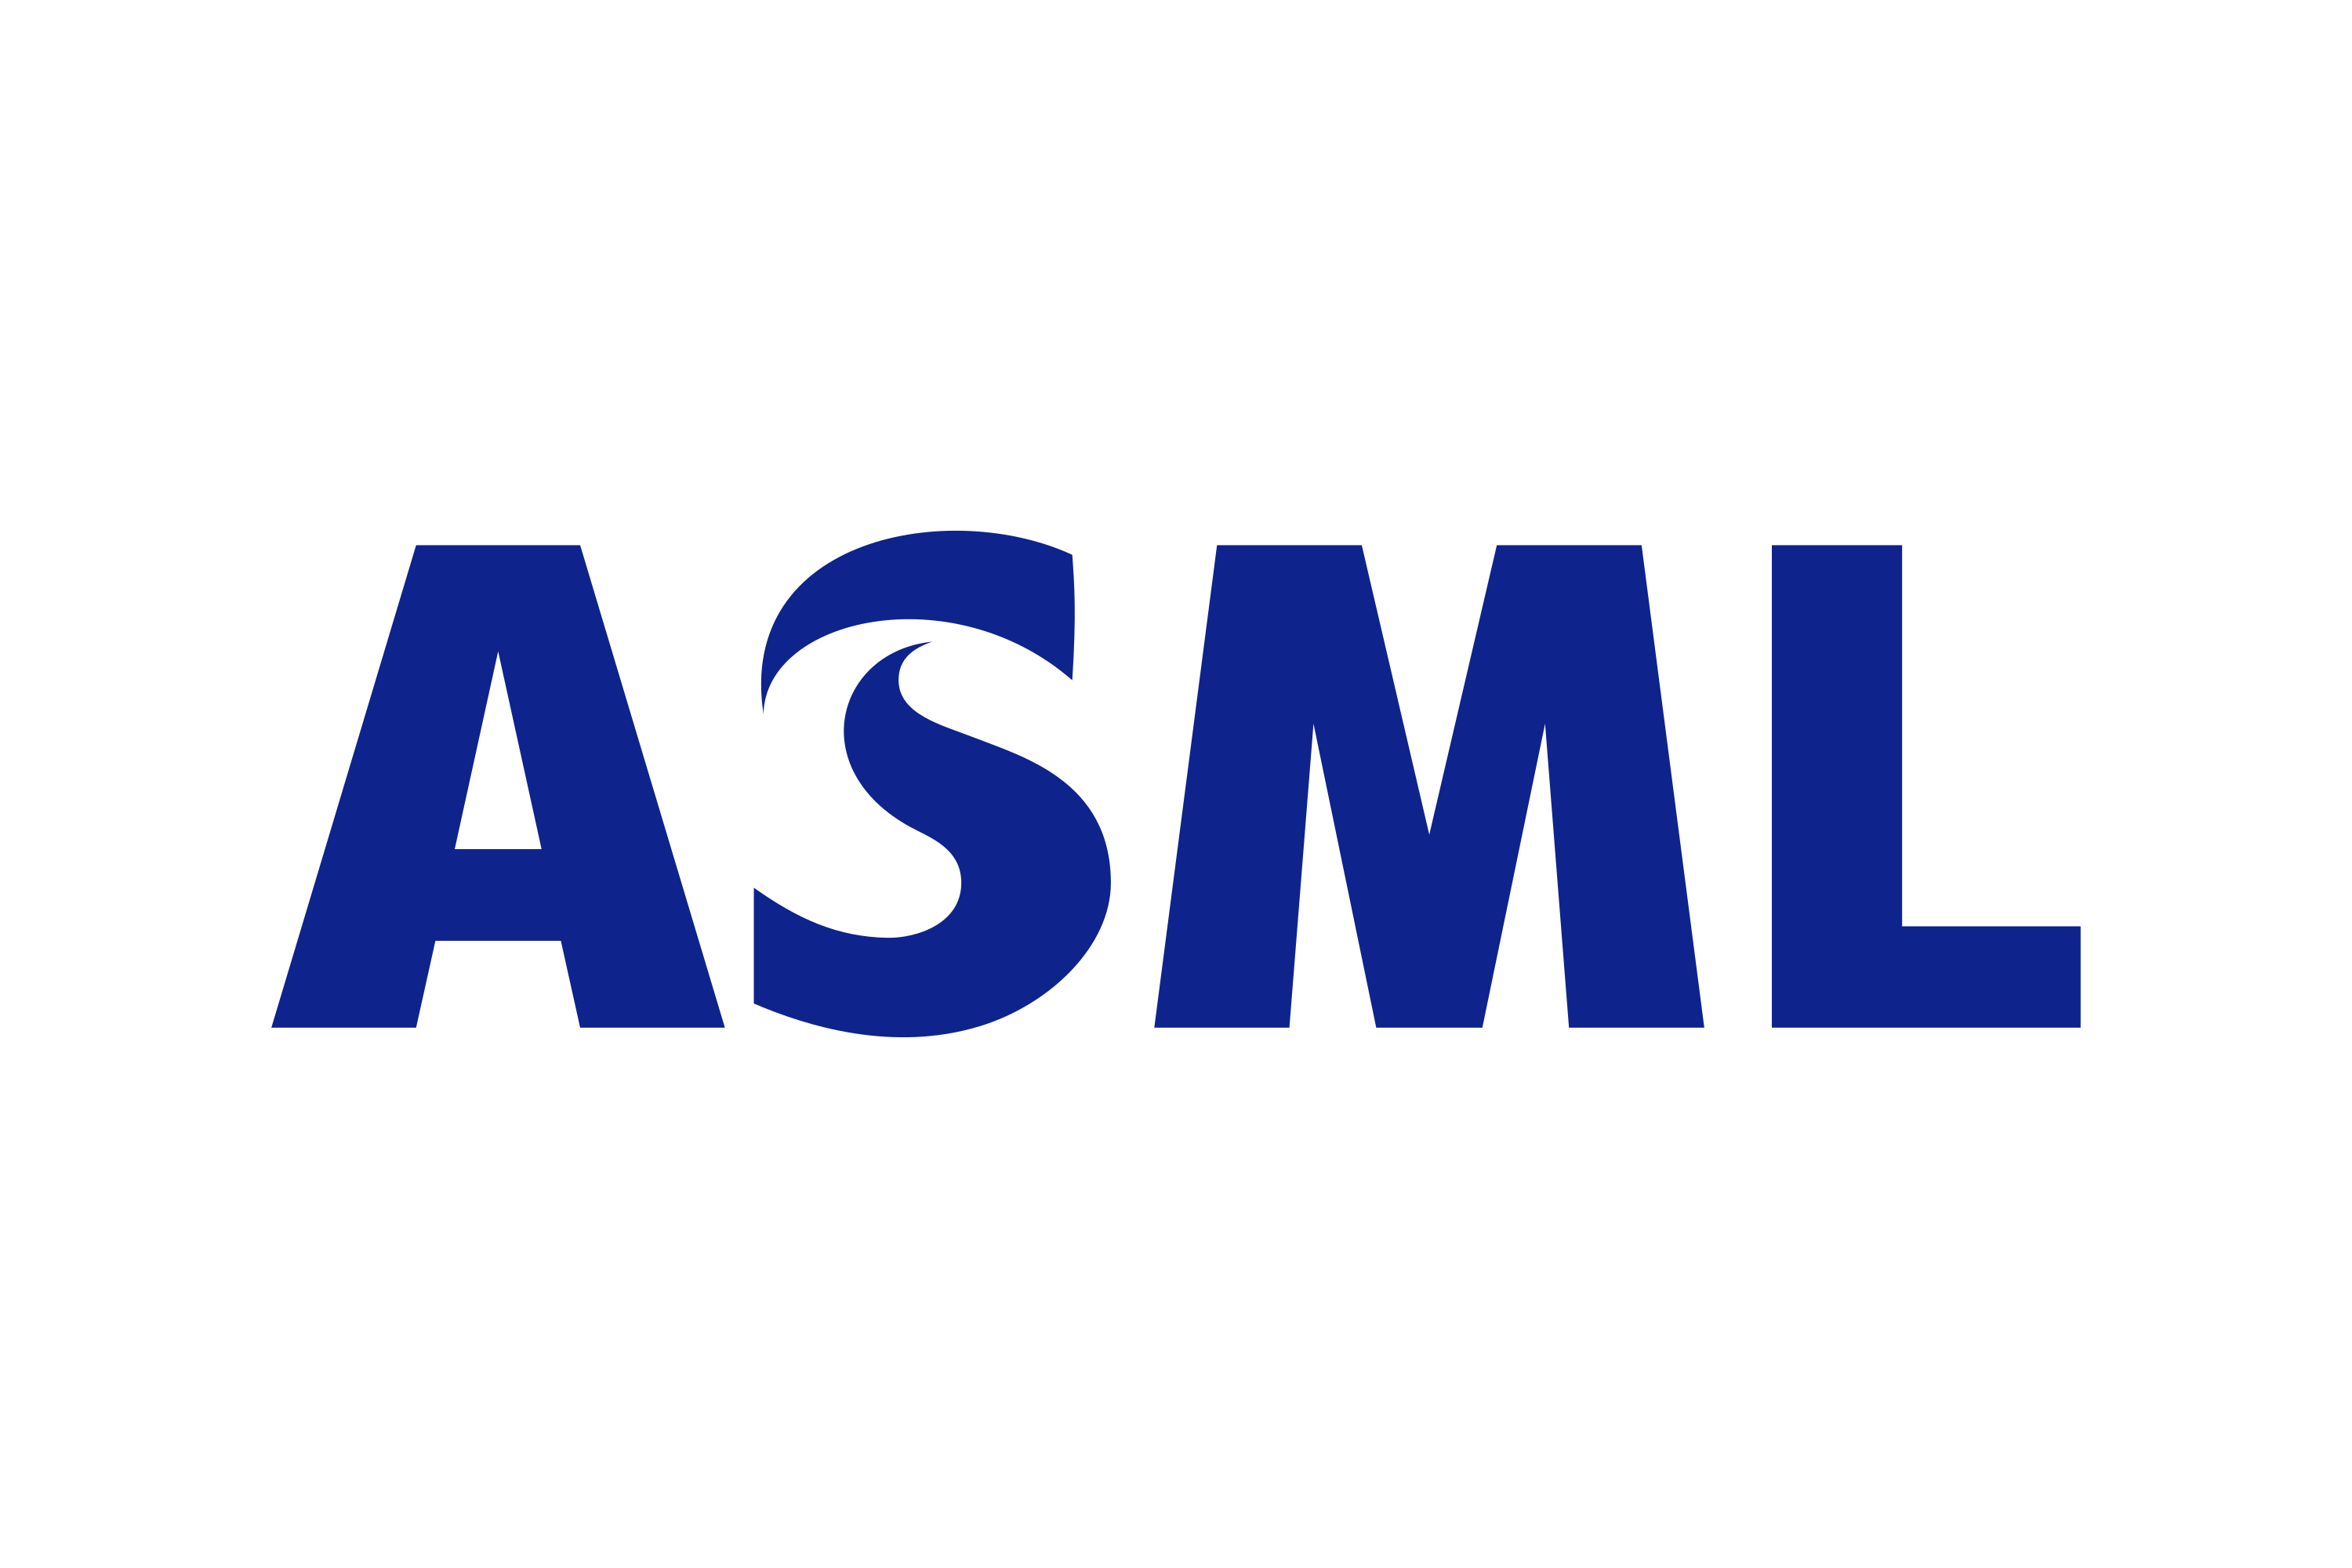 Download ASML Holding Logo in SVG Vector or PNG File Format - Logo.wine